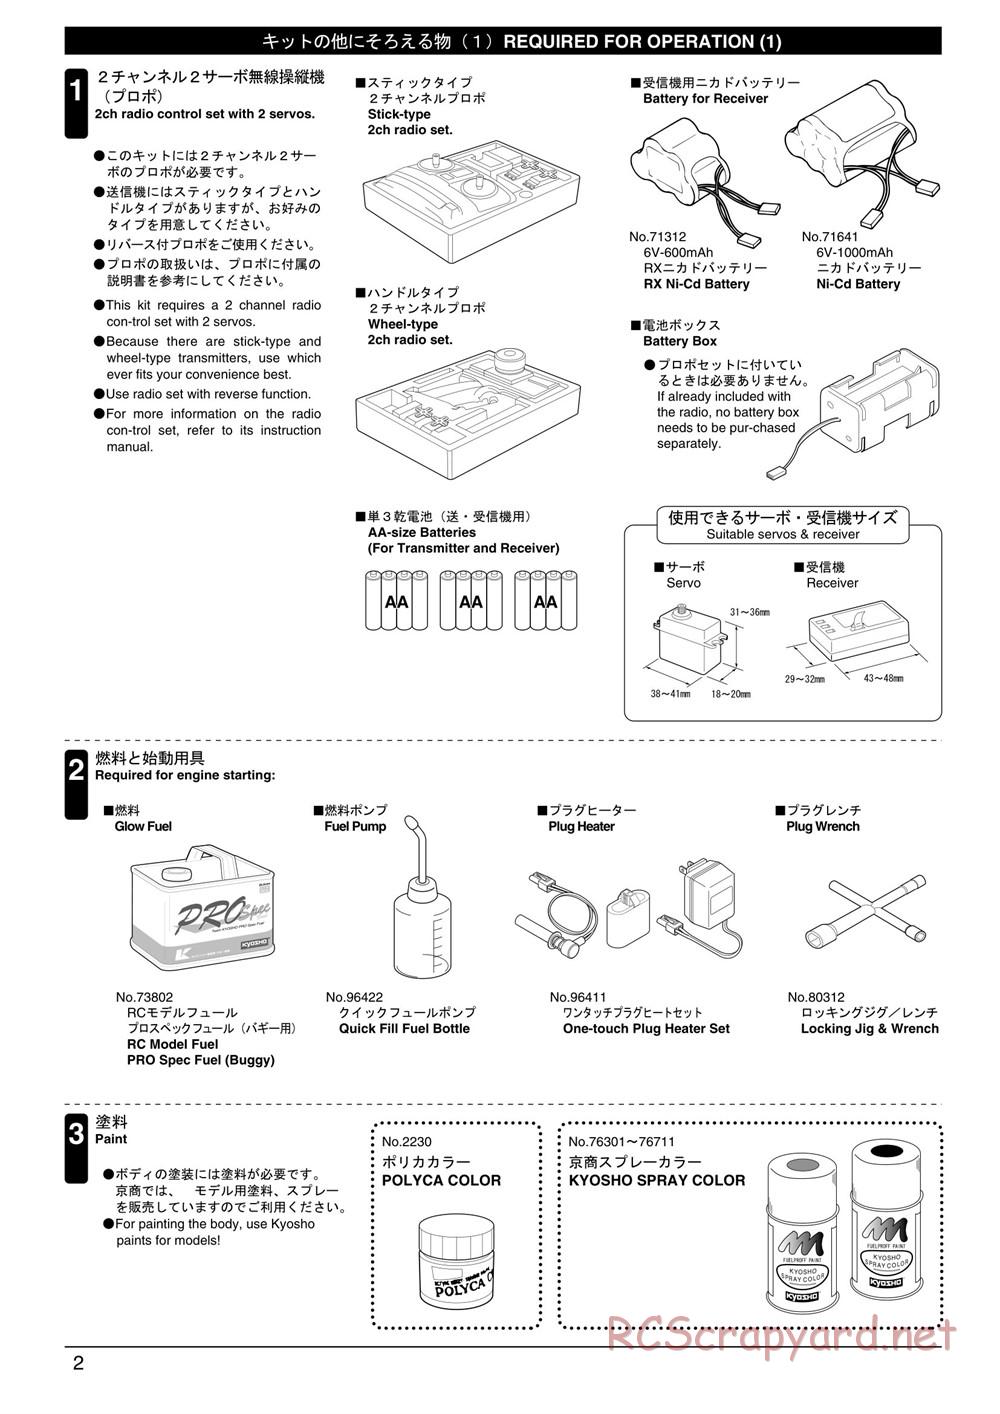 Kyosho - Super Eight GP20 Landmax 2 - Manual - Page 2